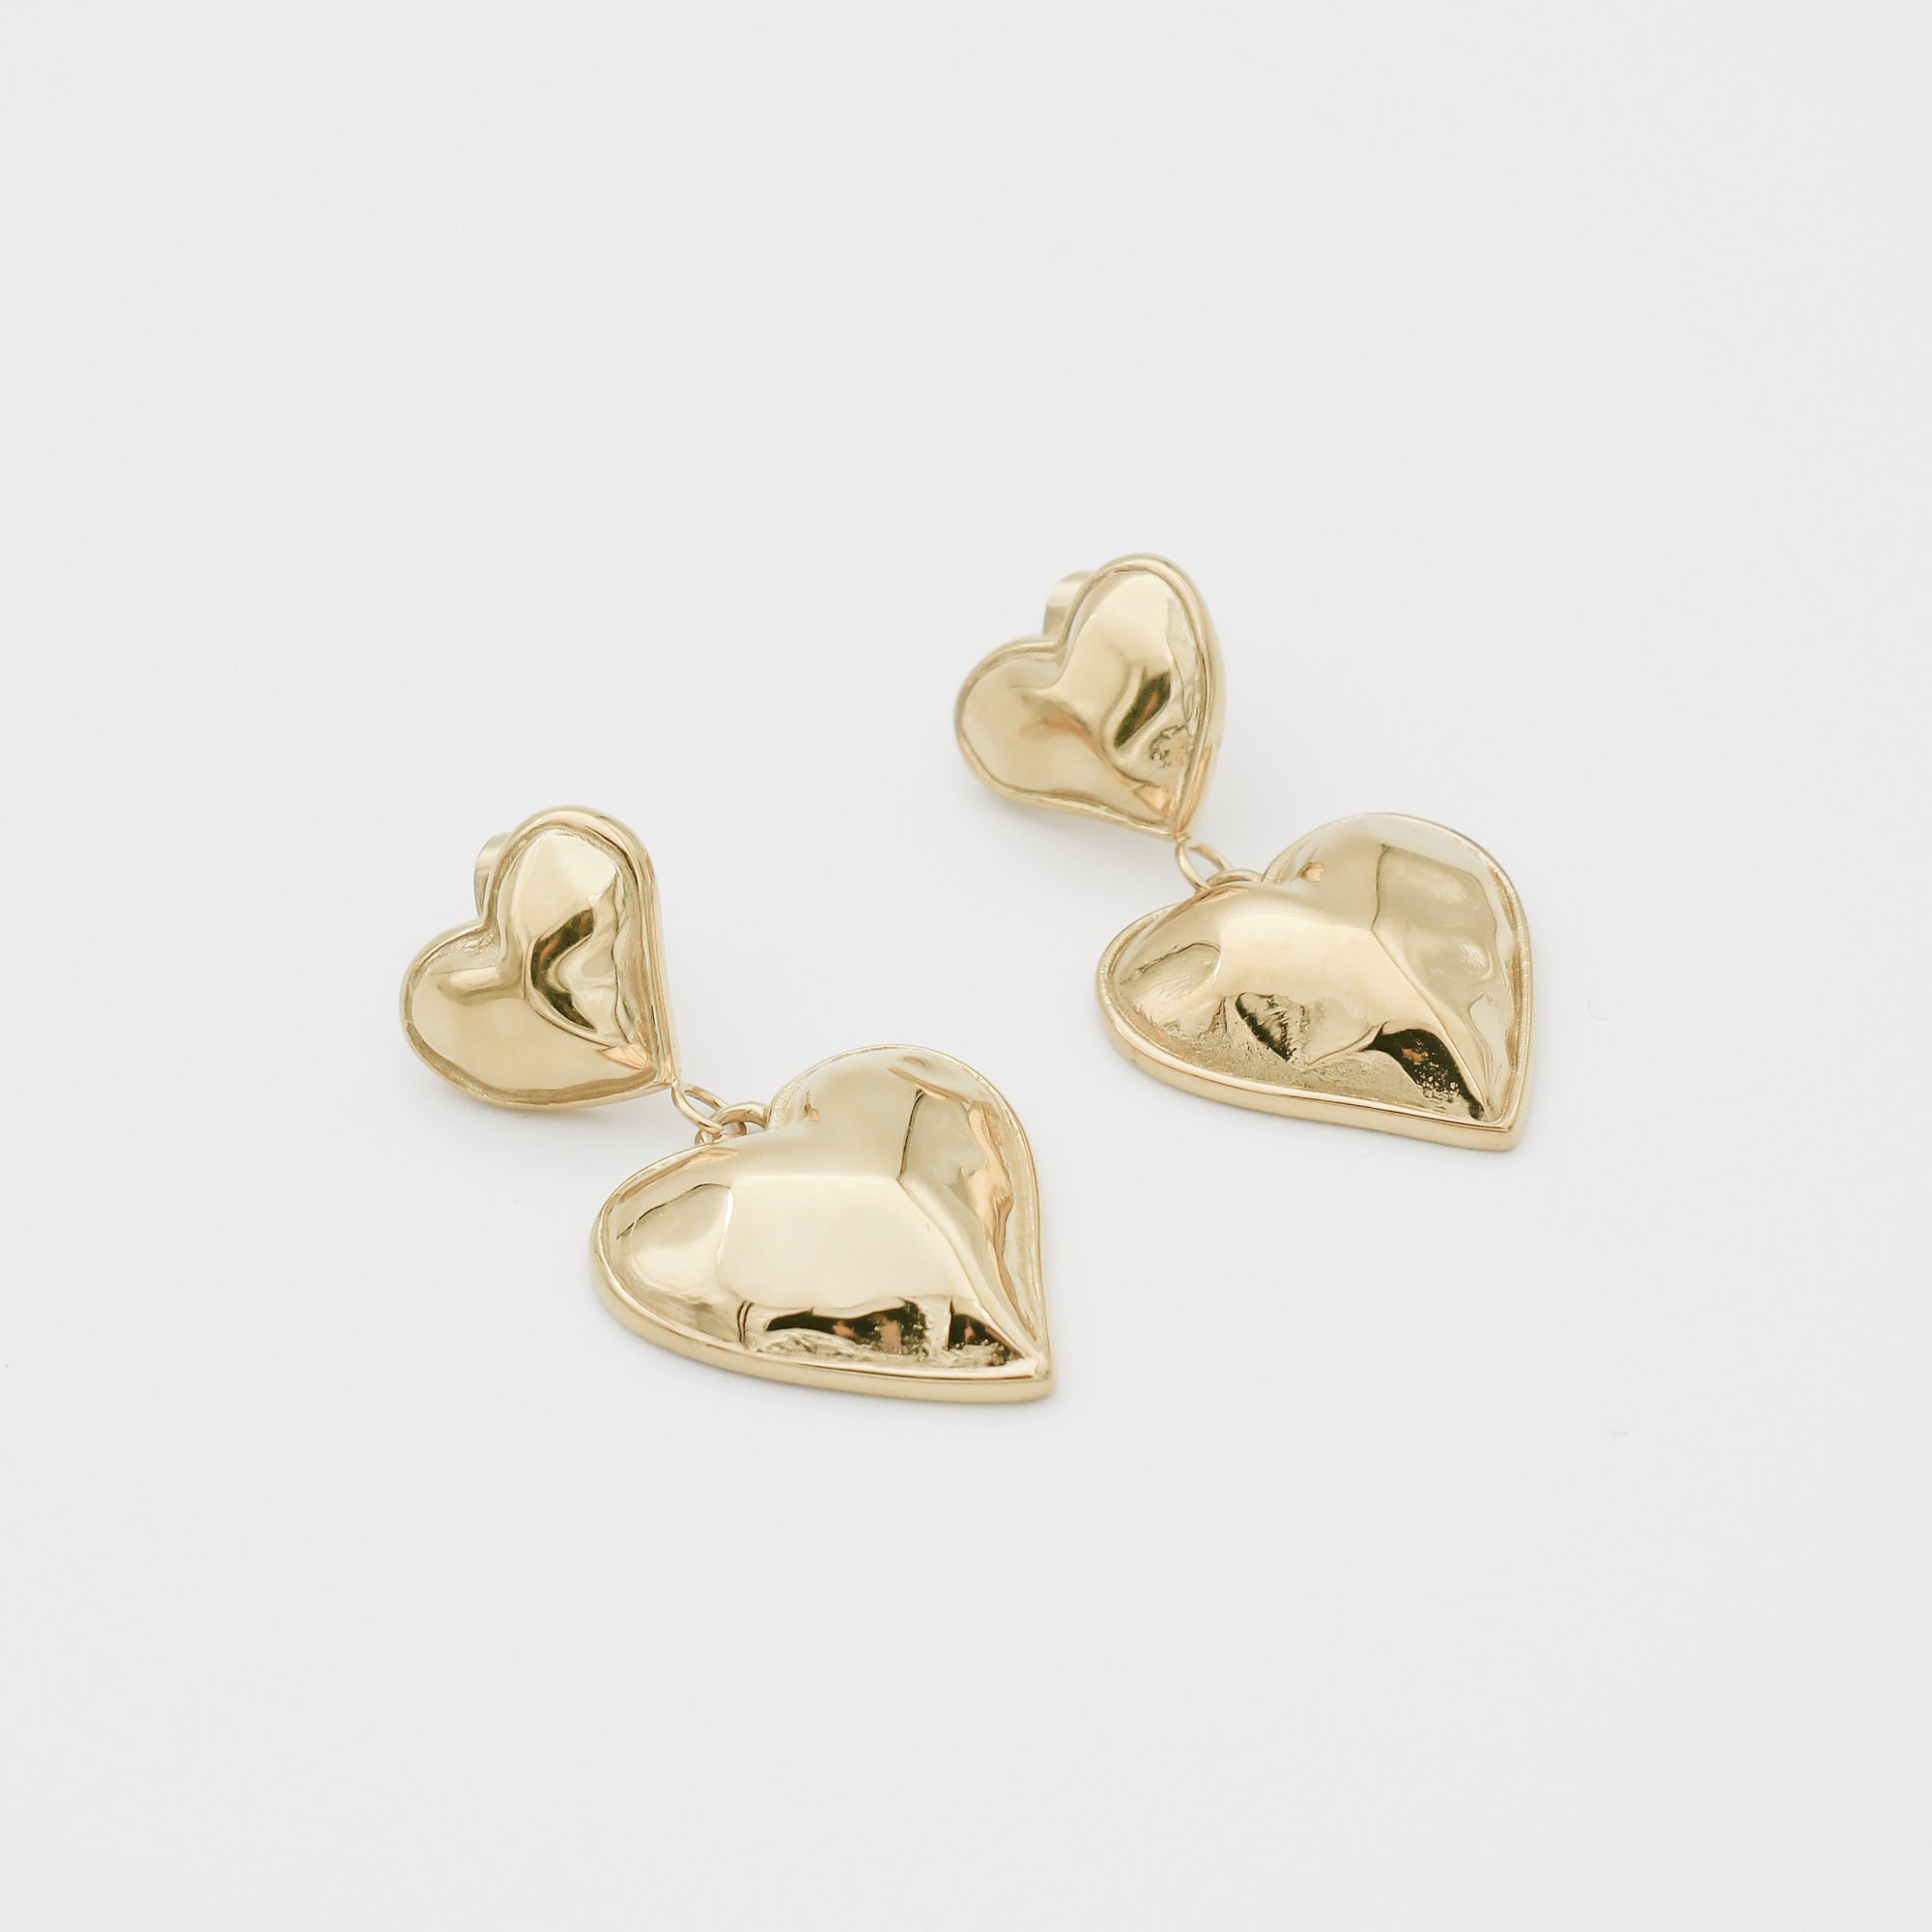 Meela Heart Earrings